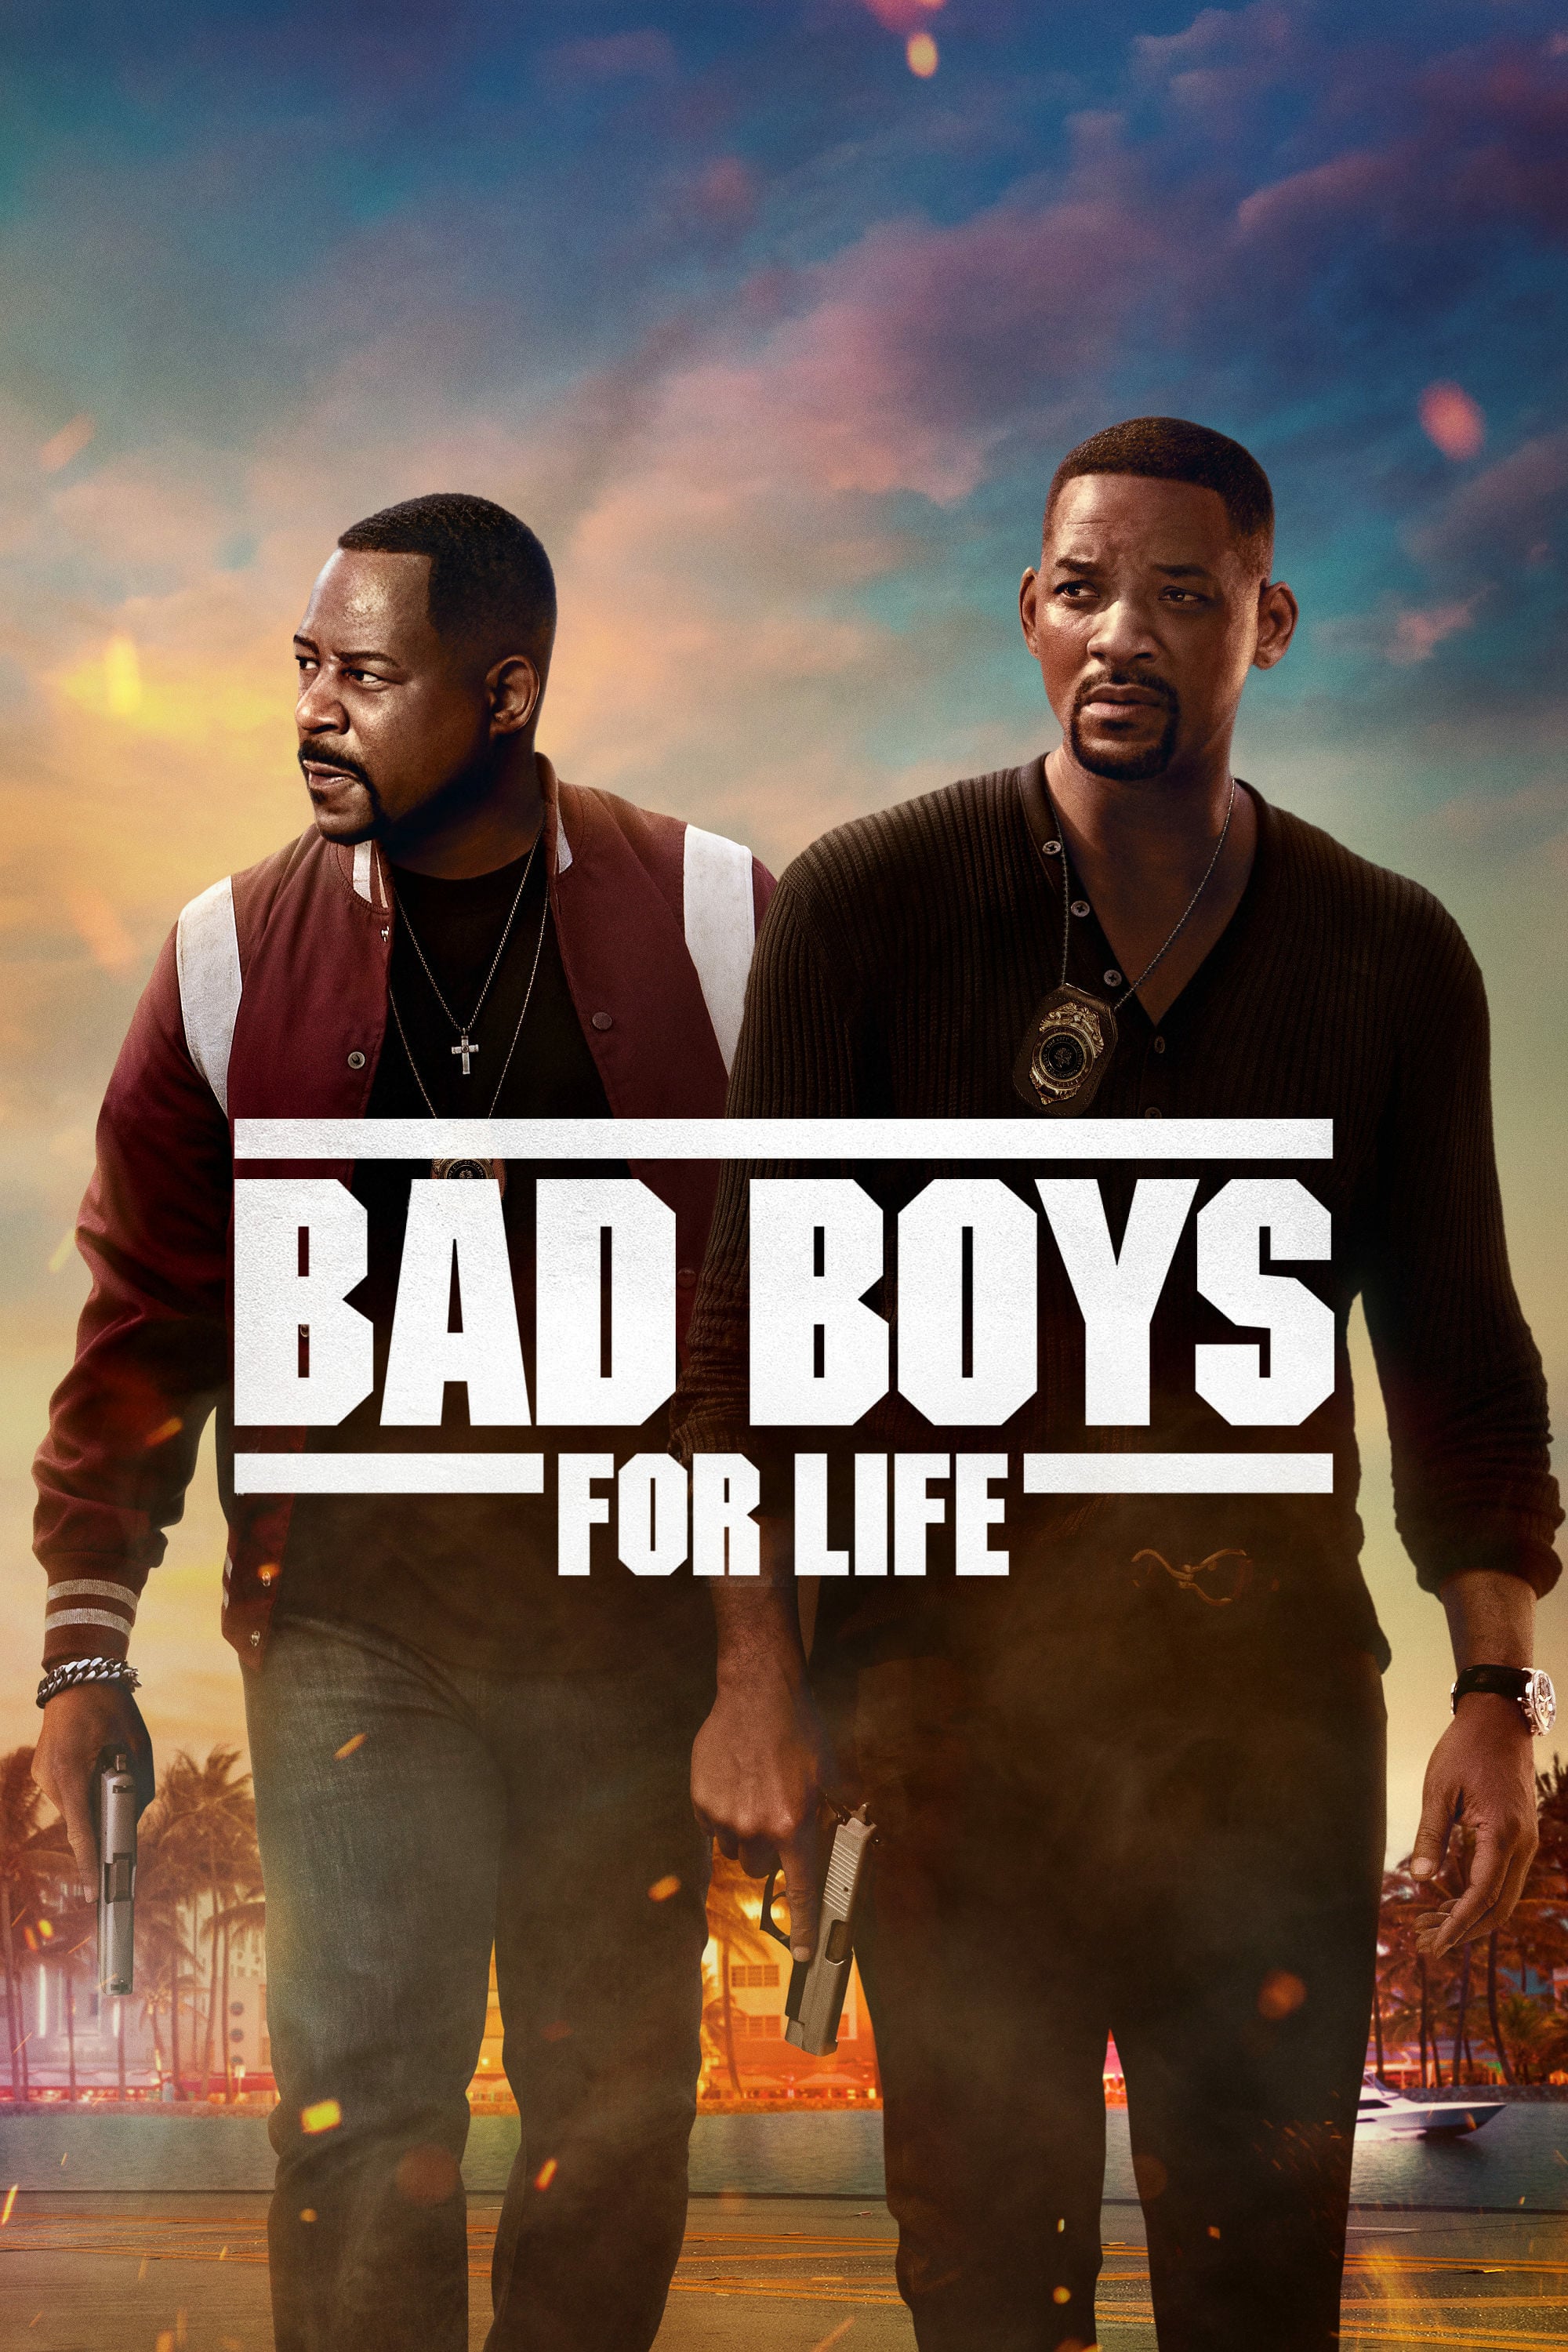 Plakat von "Bad Boys for Life"